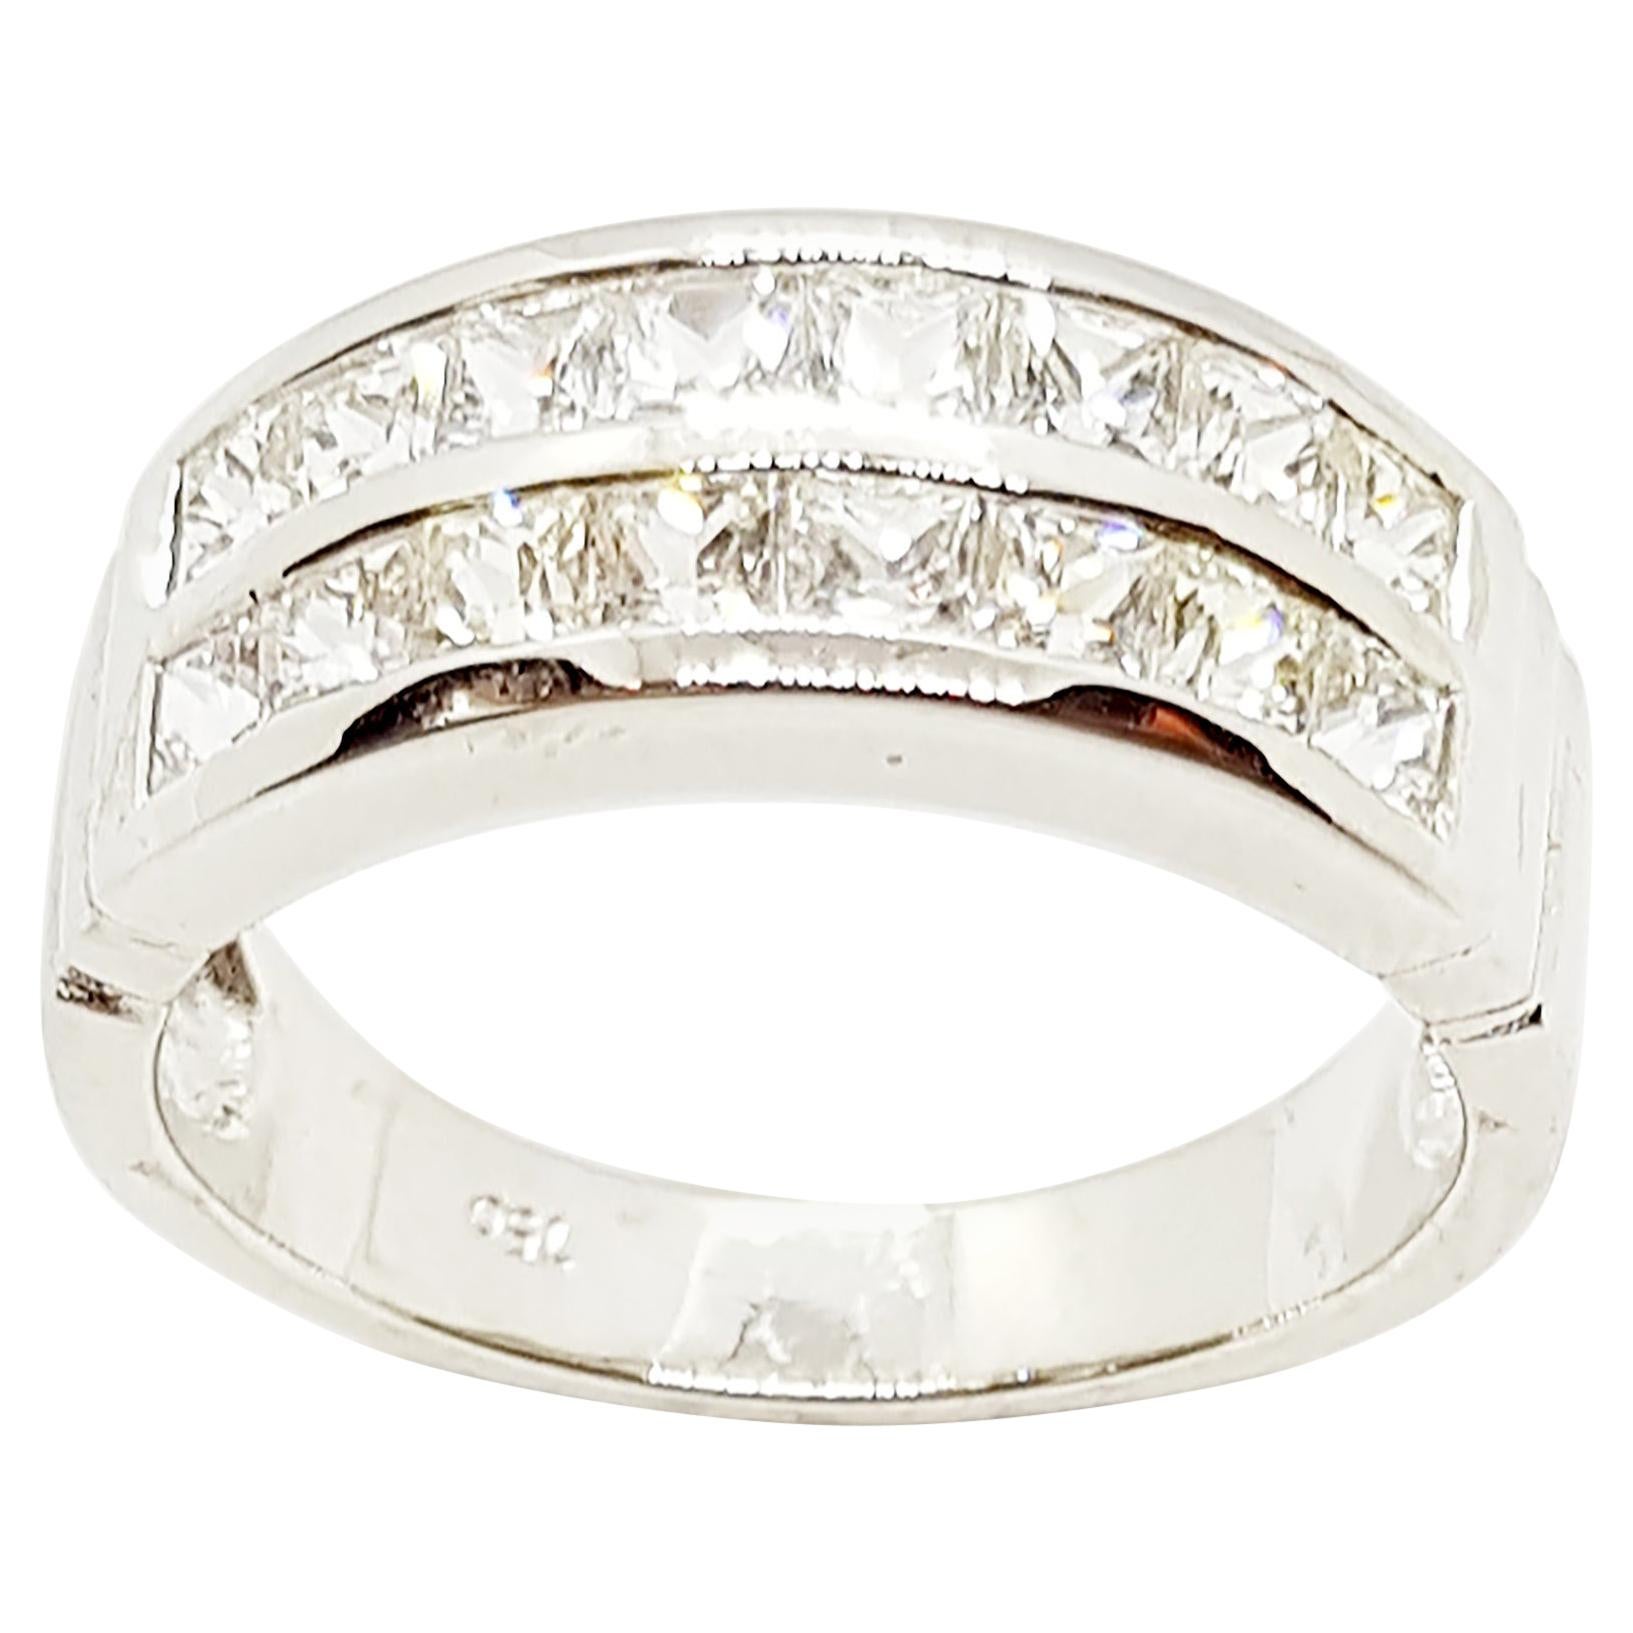 White Sapphire Ring Set in 18 Karat White Gold Settings